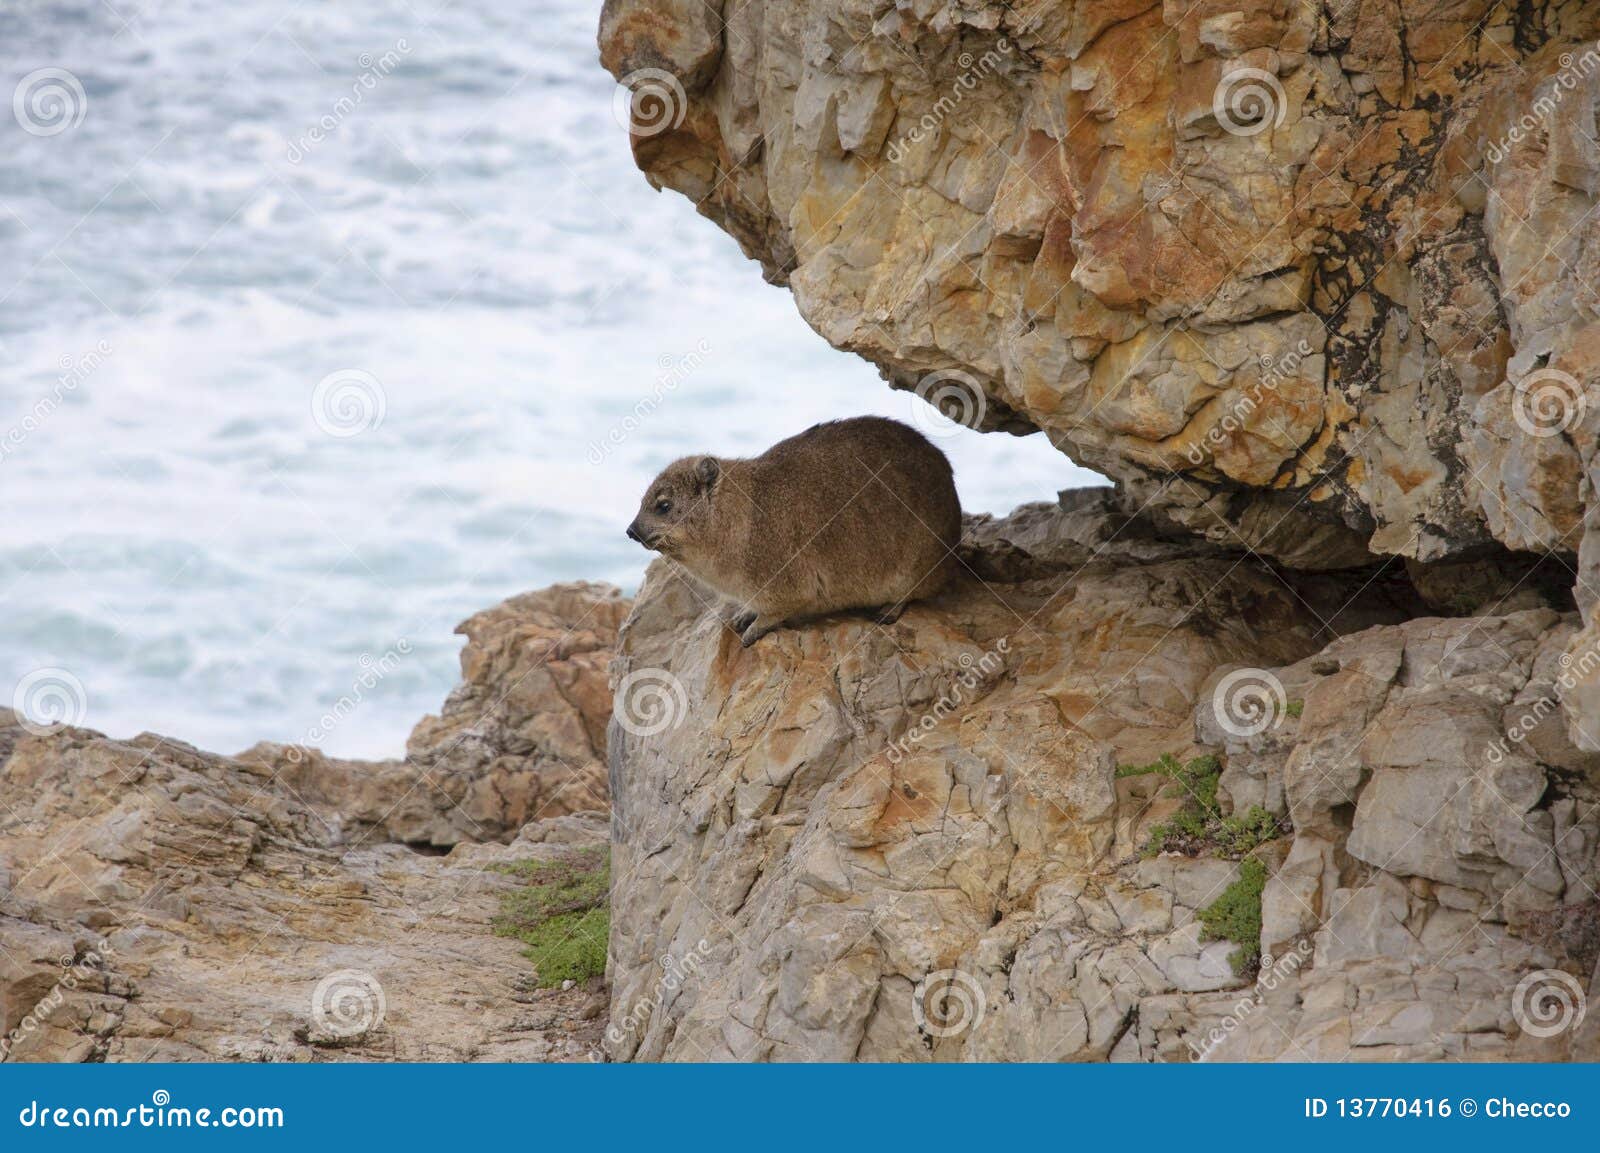 rock hyrax